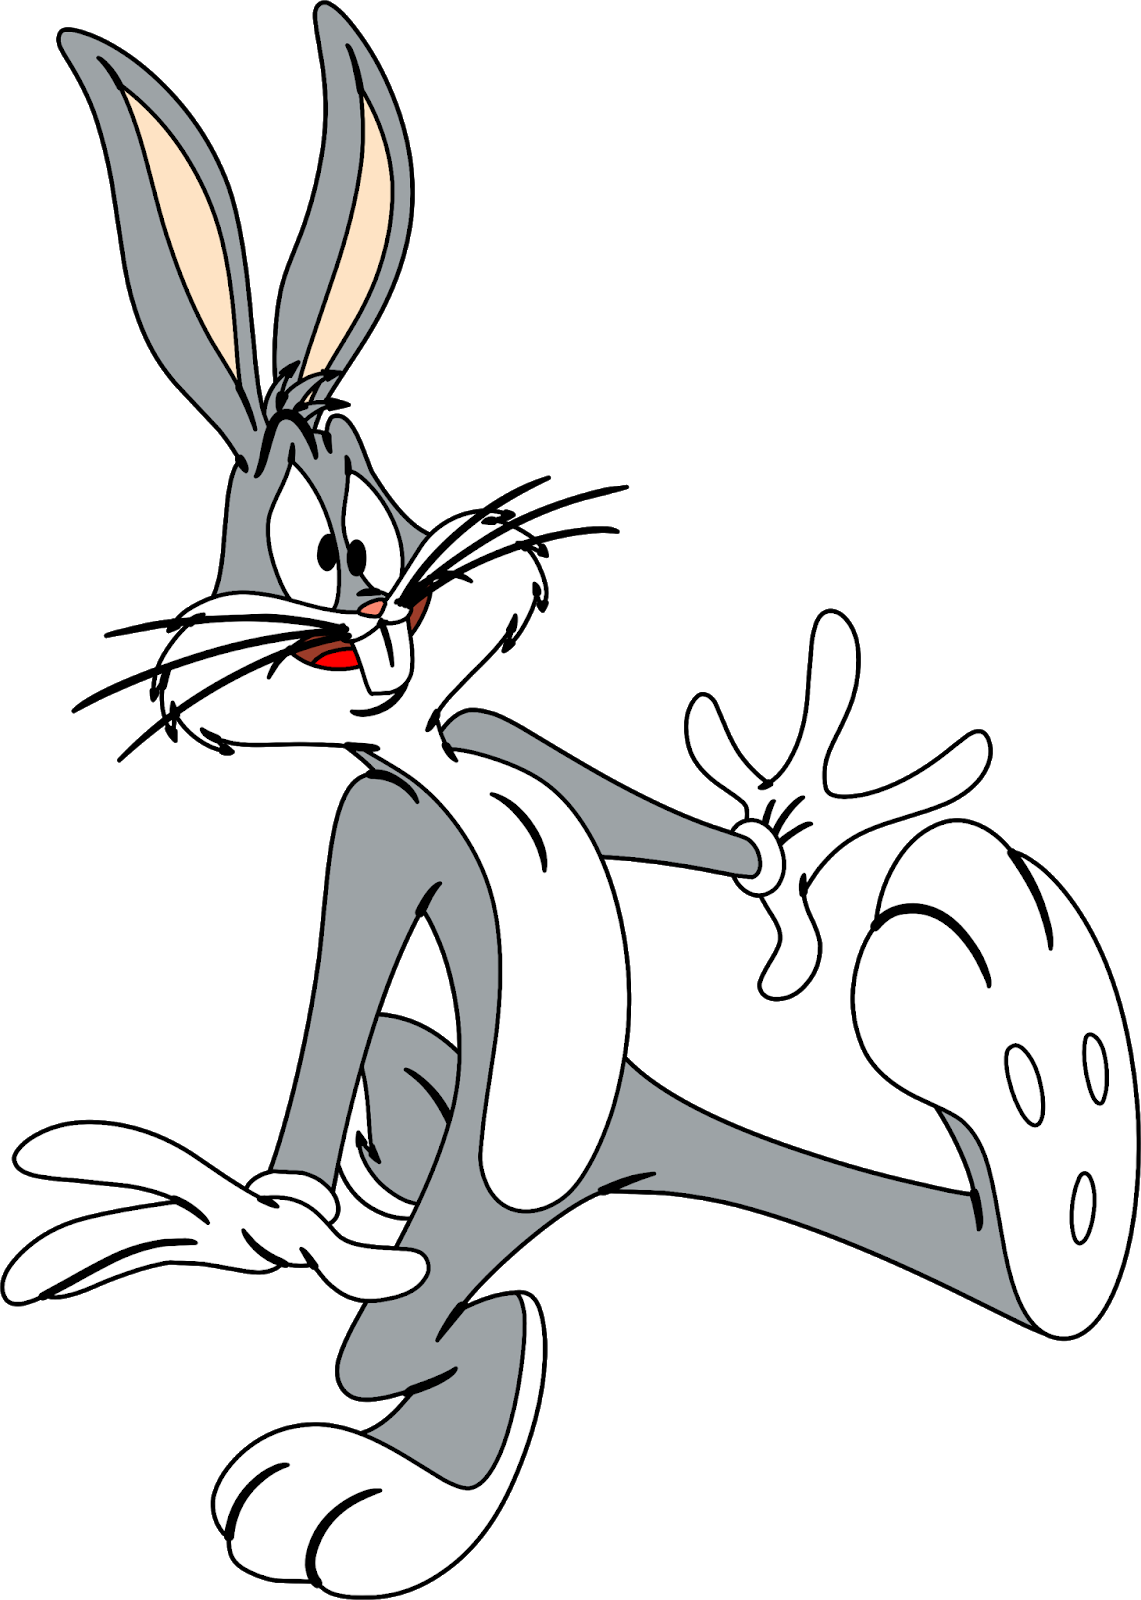 Bugs Bunny Characters, Bugs Bunny Cartoon Characters, - Bugs Bunny Scared.....